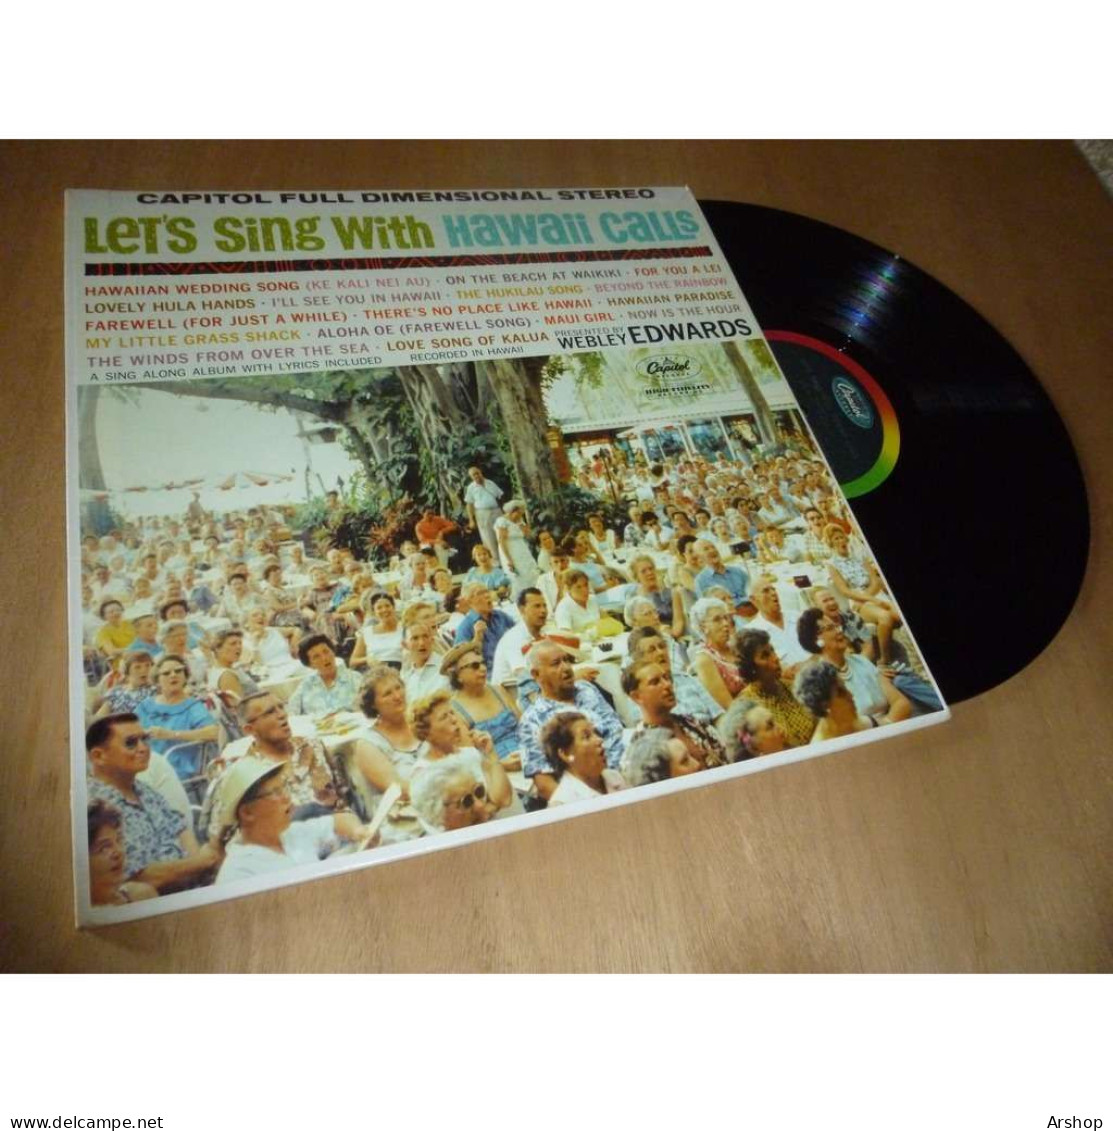 WEBLEY EDWARDS Let's Sing With Hawaii Calls CAPITOL SKAO 1518 US Lp 1961 - Musiques Du Monde